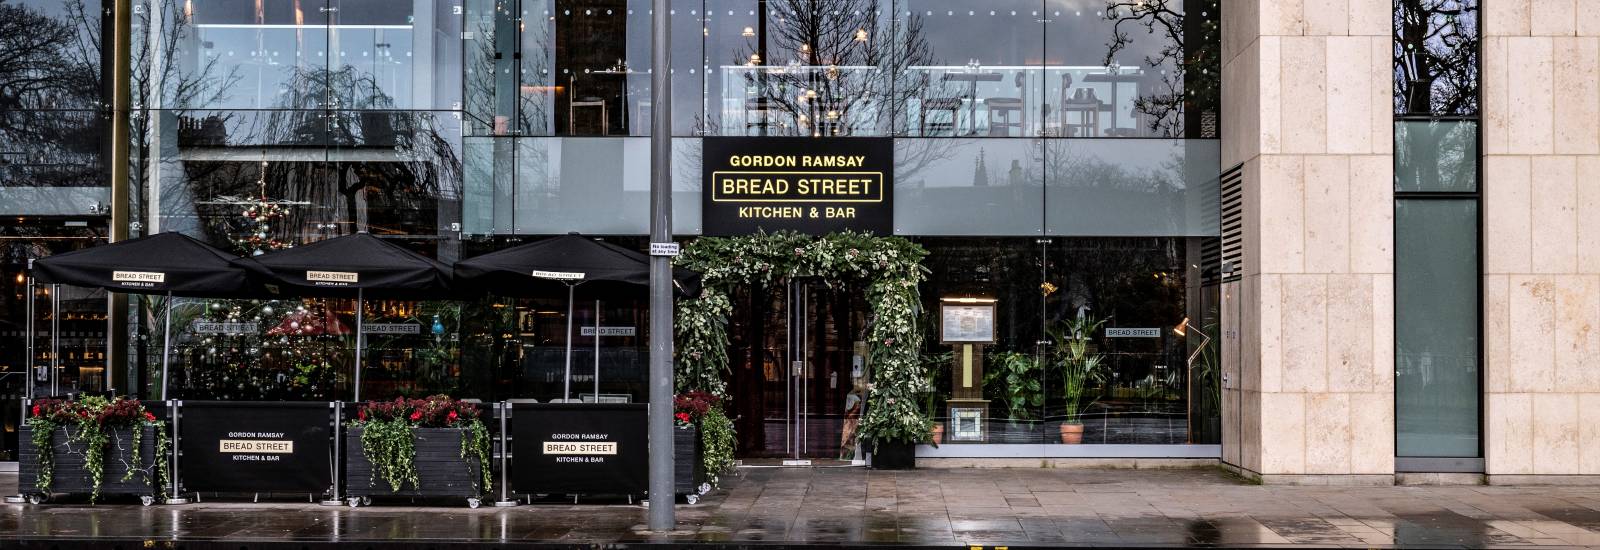 bread street kitchen and bar - edinburgh menu